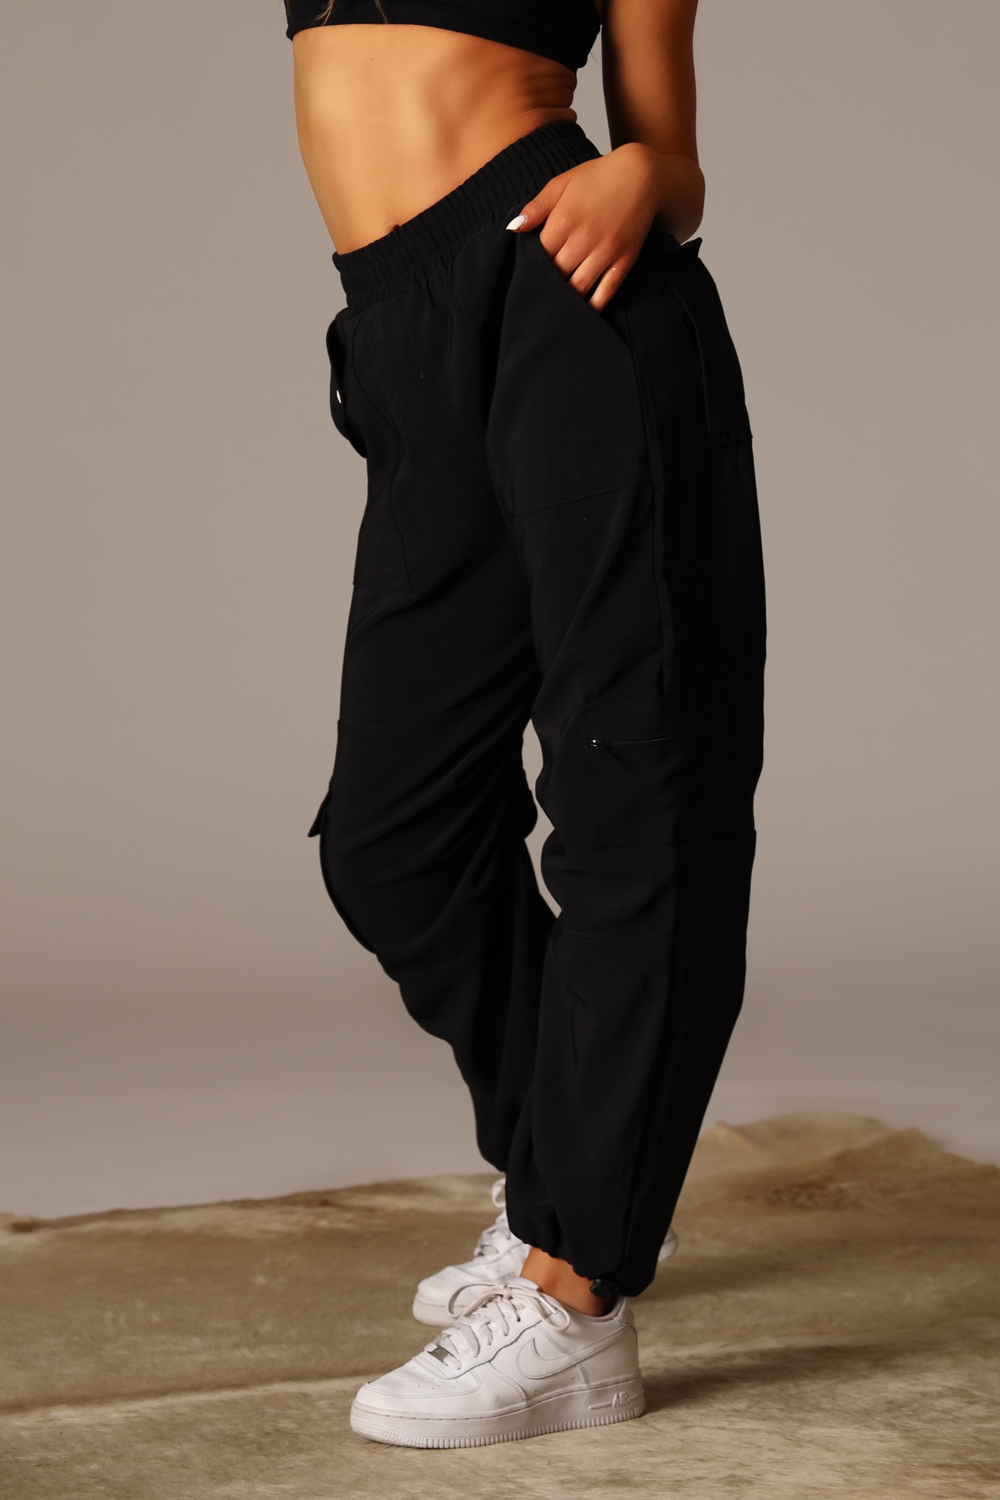 Lululemon Dance Studio Pants Garnet Black Cropped pants Size:6